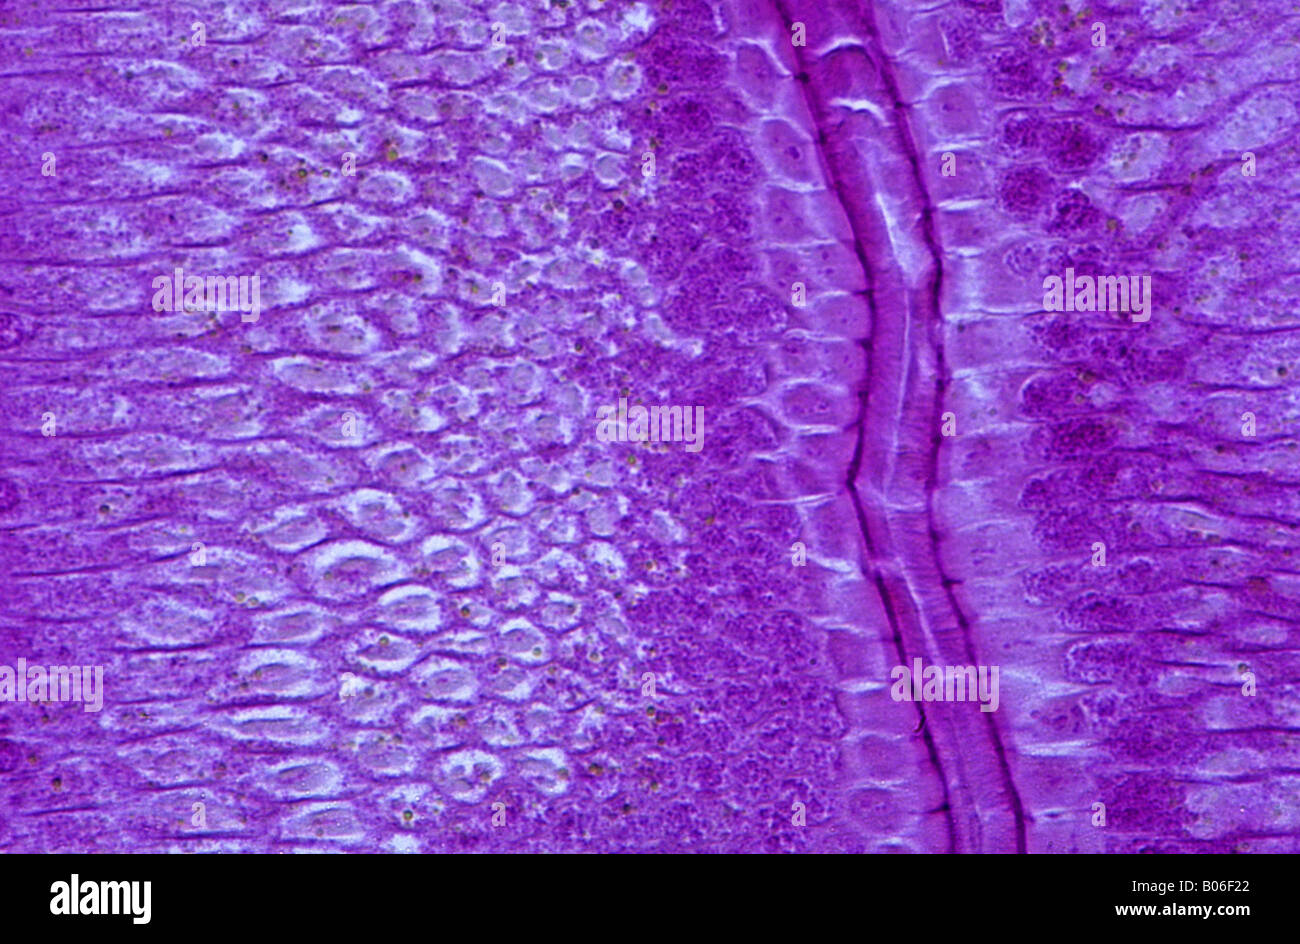 Epithelial cells of intestine of Ascaris 140x Stock Photo